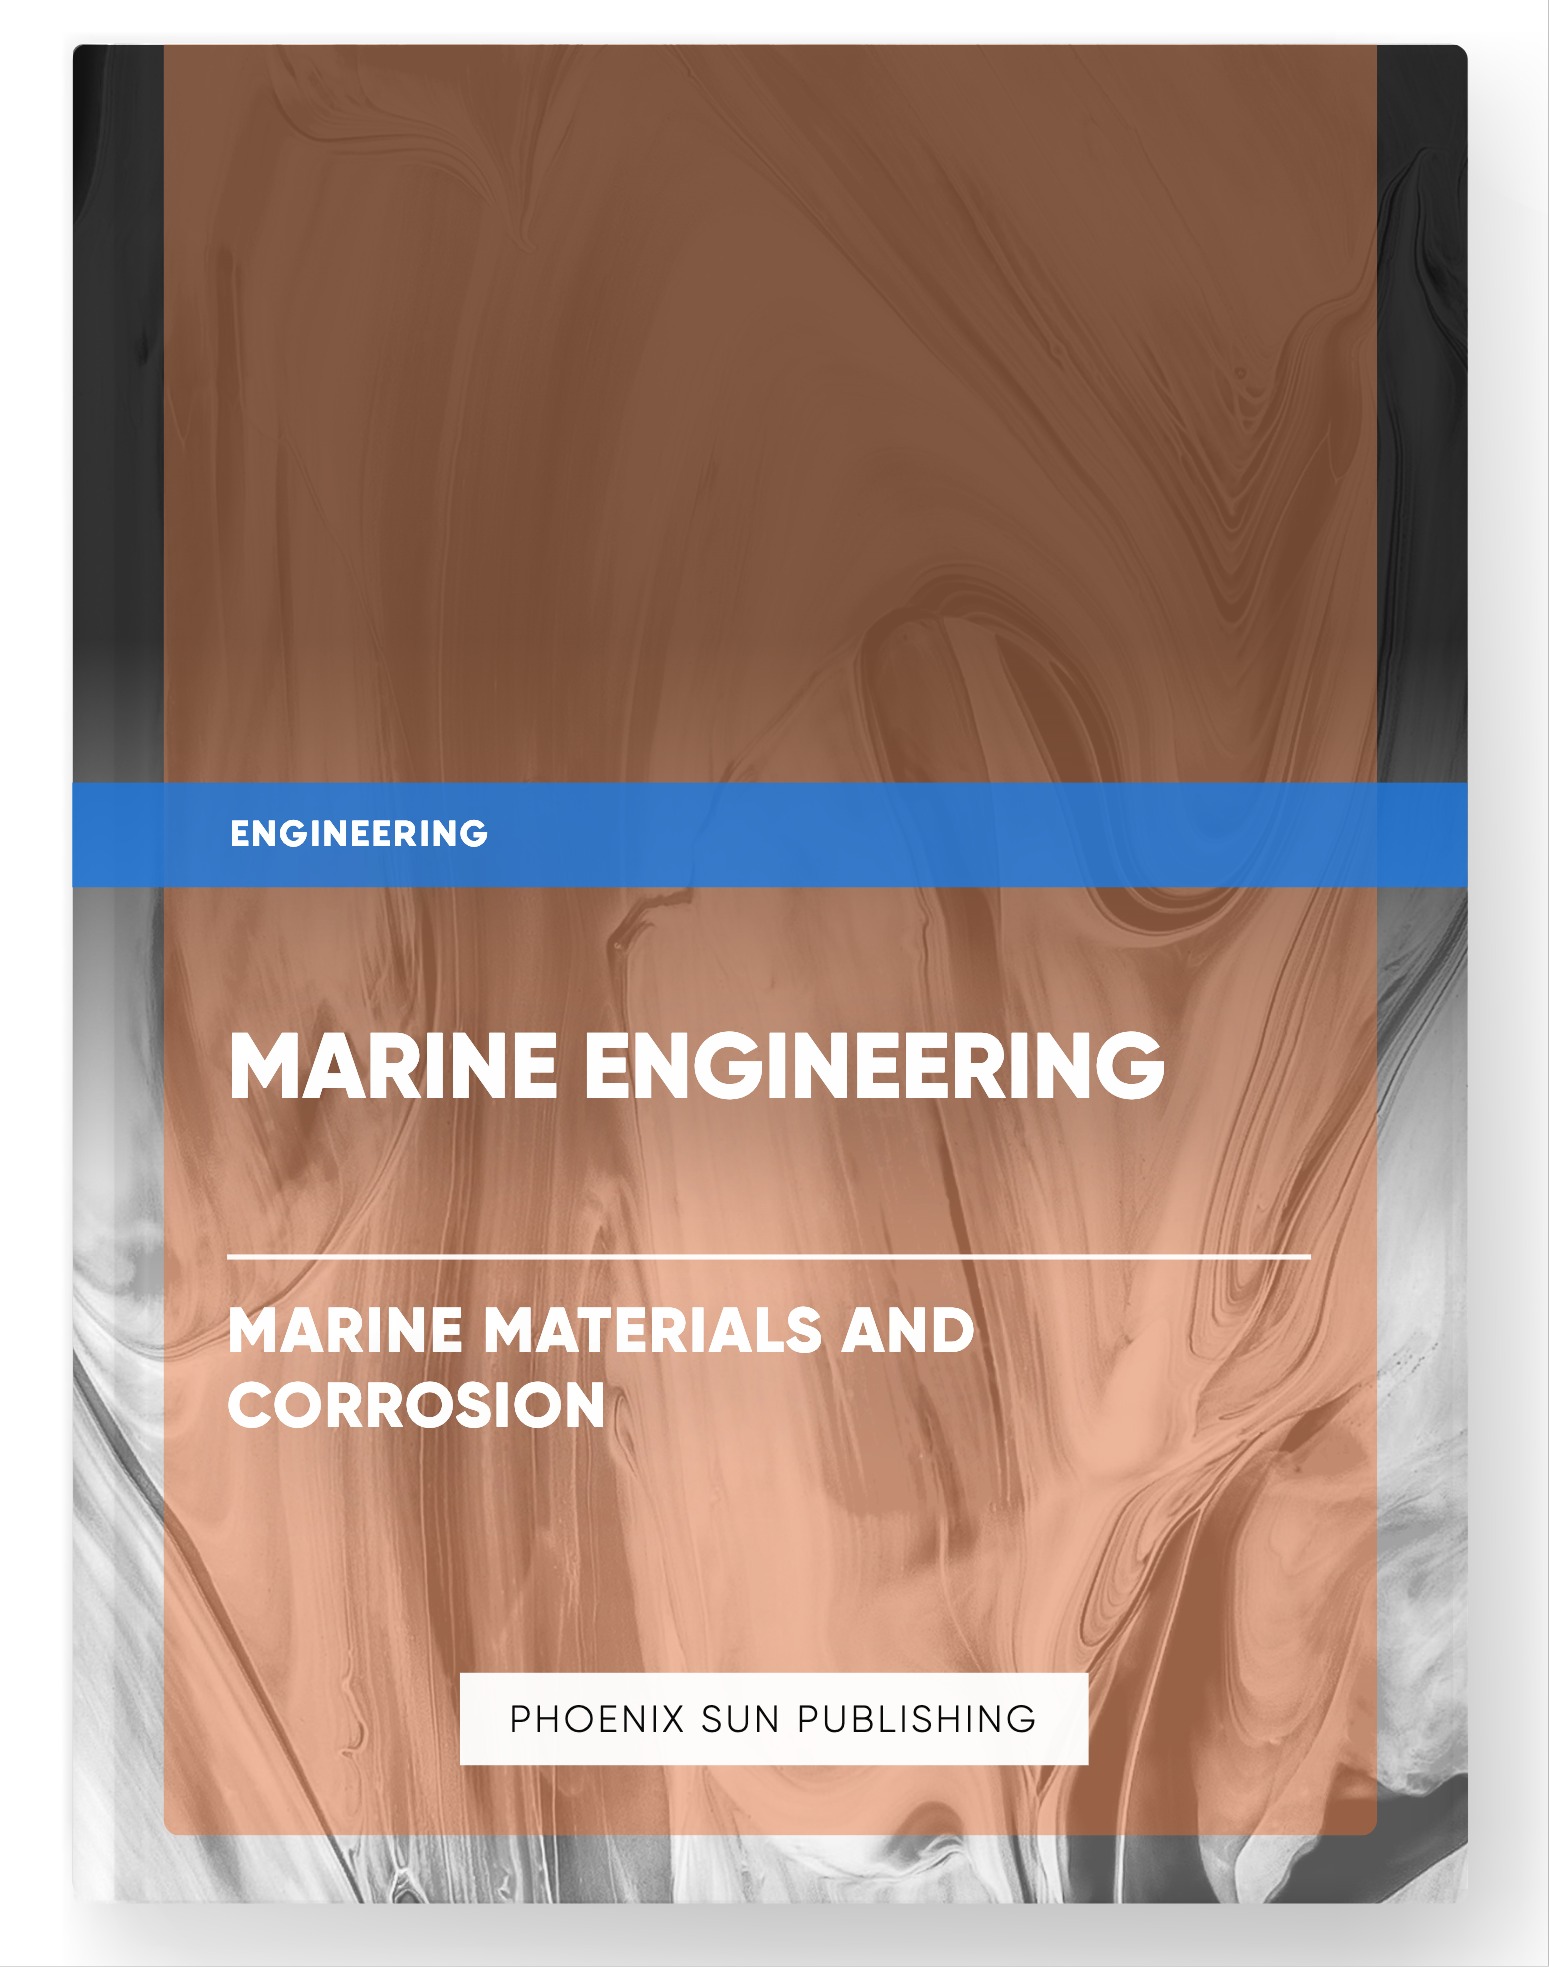 Marine Engineering – Marine Materials and Corrosion